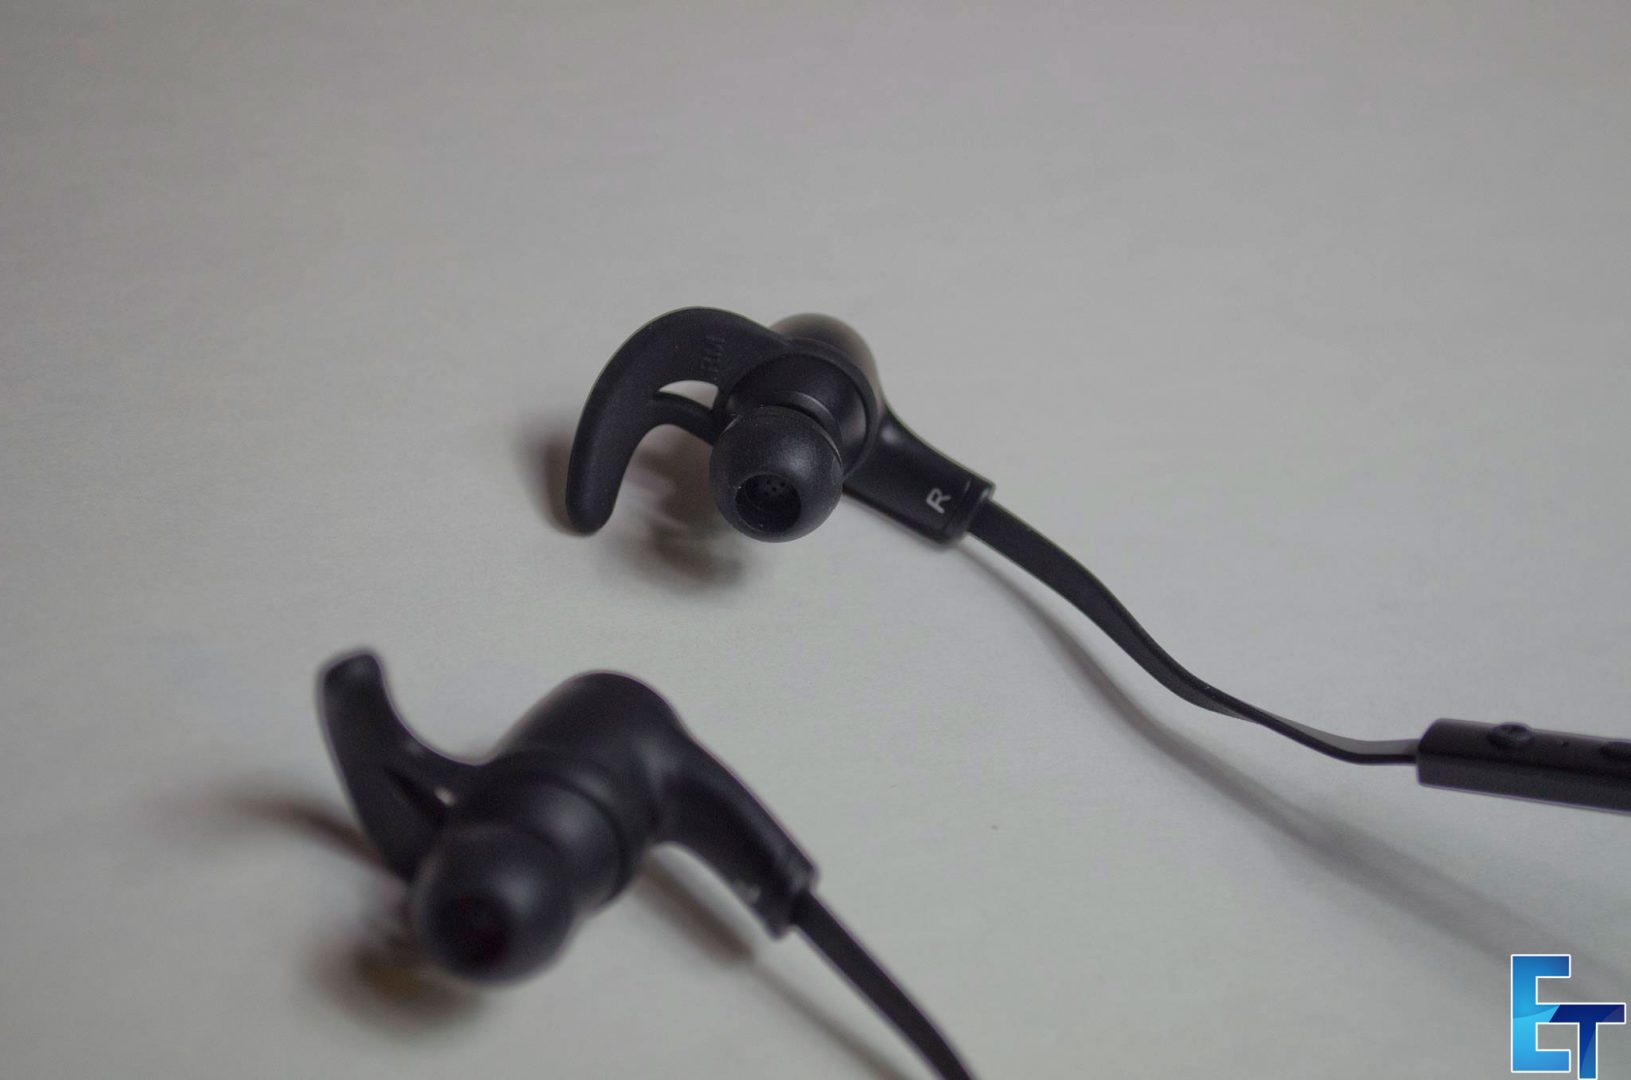 Deewear-FlyONE-Sport-Bluetooth-Headphones-Review_6